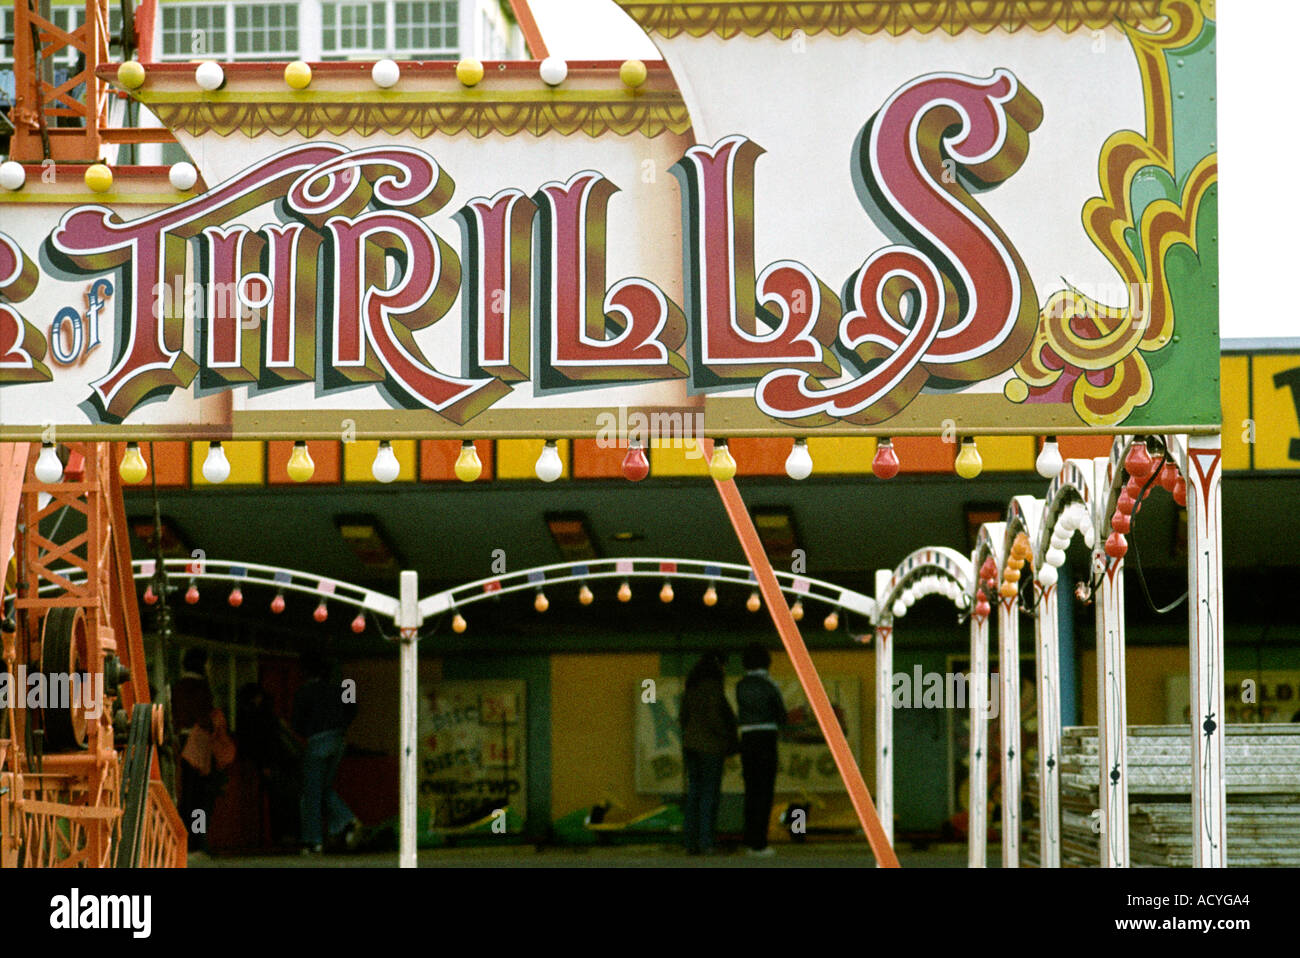 Wales Barry Island seaside fairground ride thrills sign Stock Photo